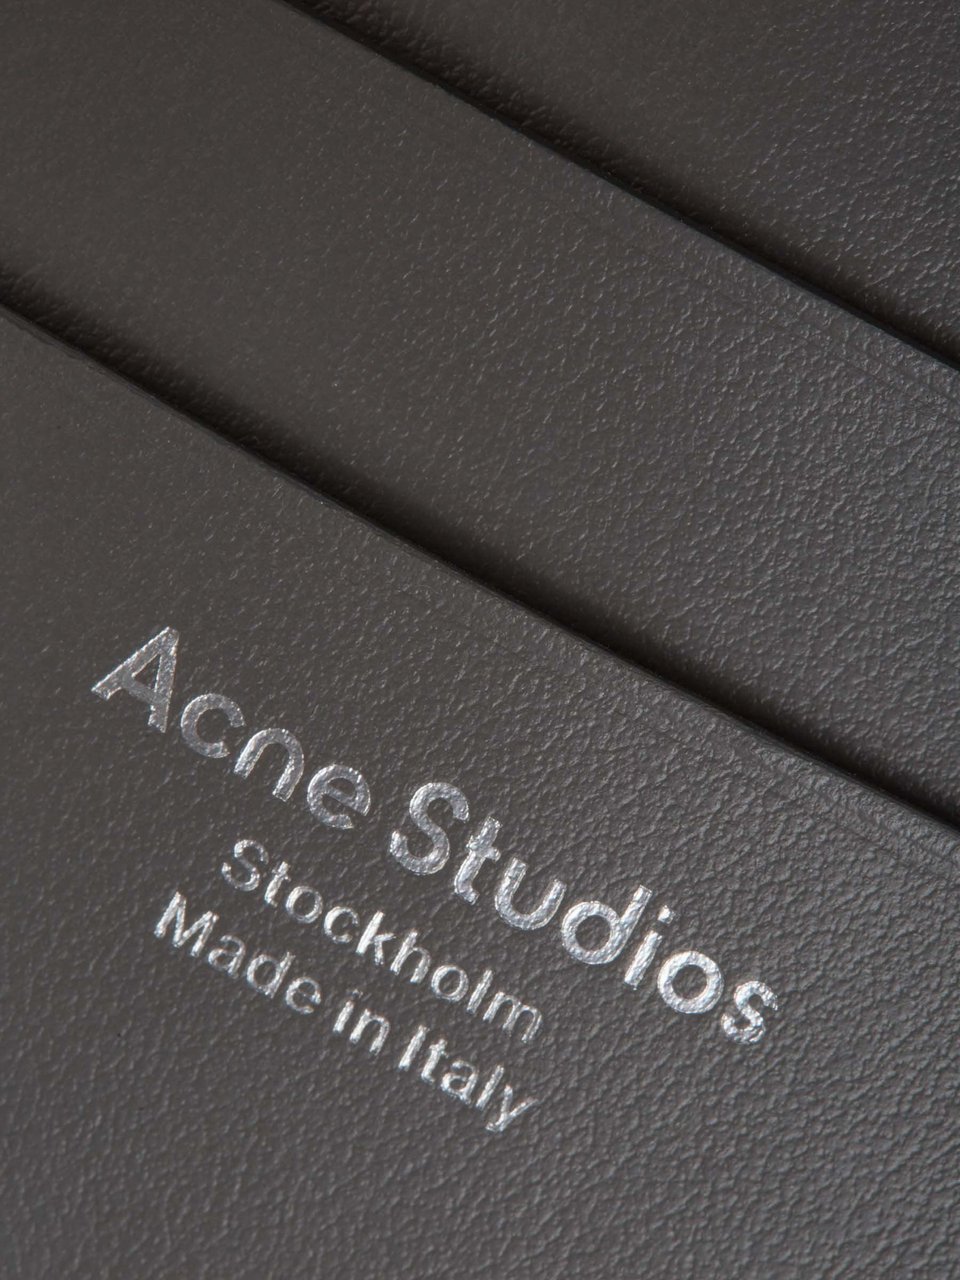 Acne Studios Leather Logo Card Holder Grijs